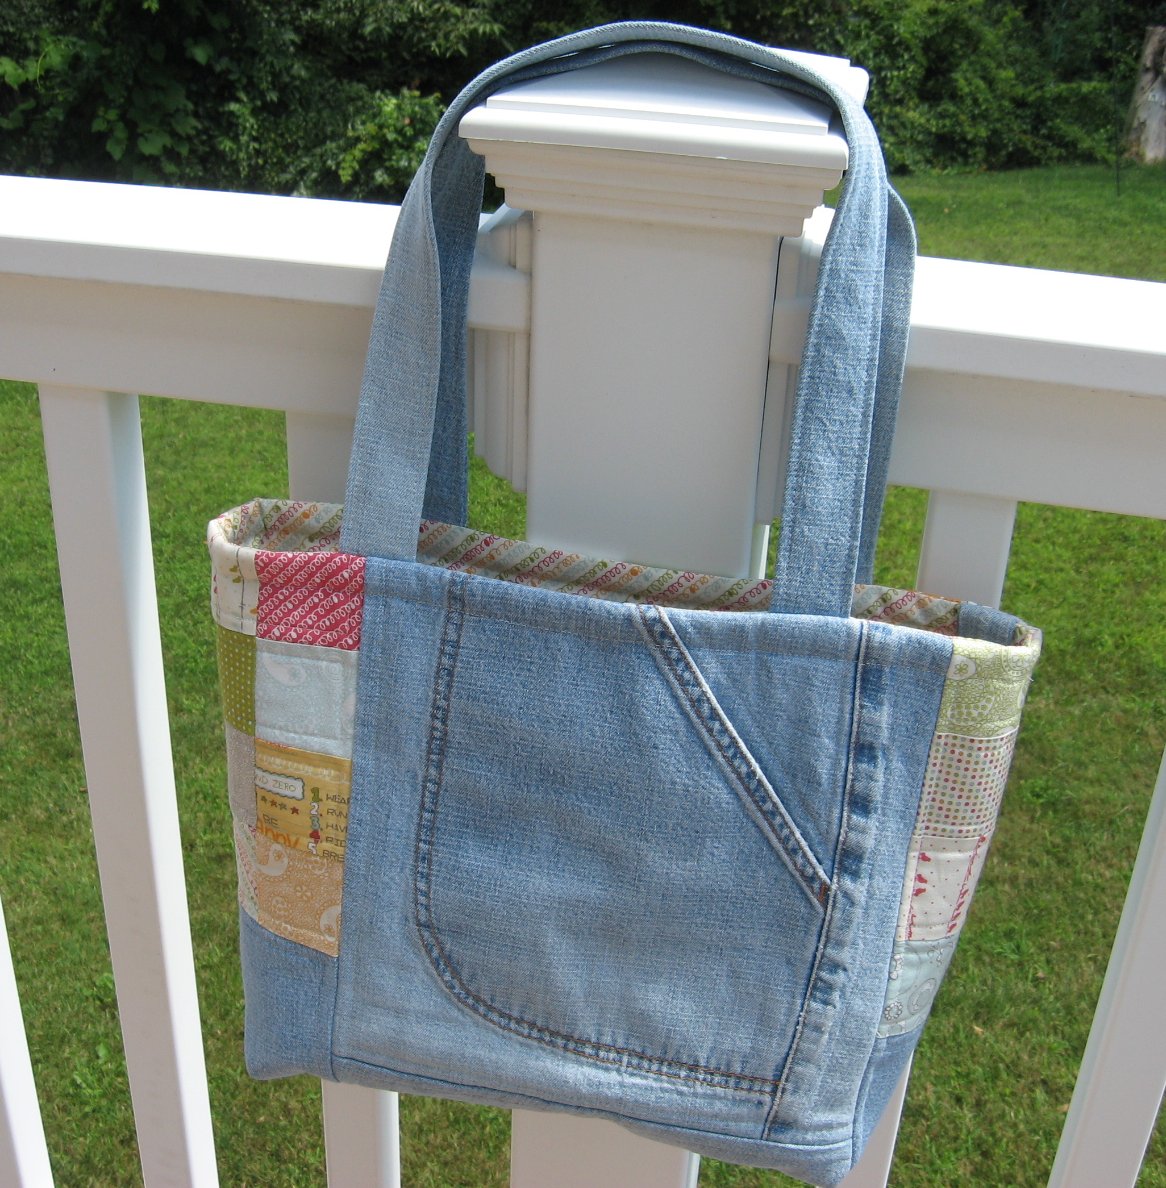 Hooked on Needles: Upcycled Denim/Repurposed Jeans ~ Summertime creativity